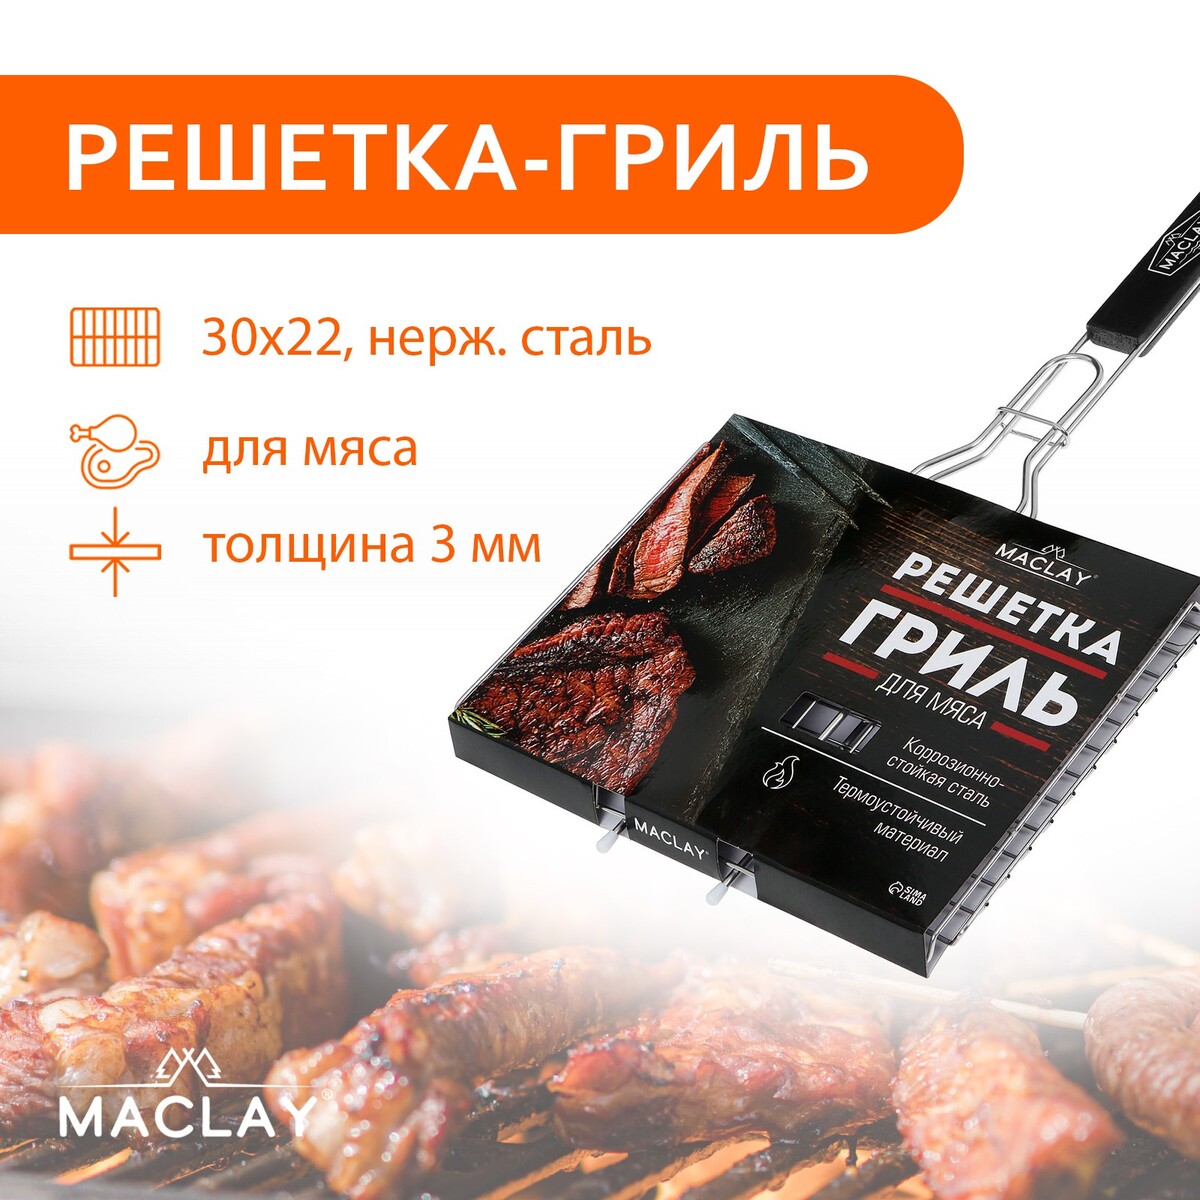 Решетка гриль maclay premium, 50х30х22 см, для мяса, нержавеющая сталь решетка гриль maclay premium 54х17х8 5 см для сосисок нержавеющая сталь